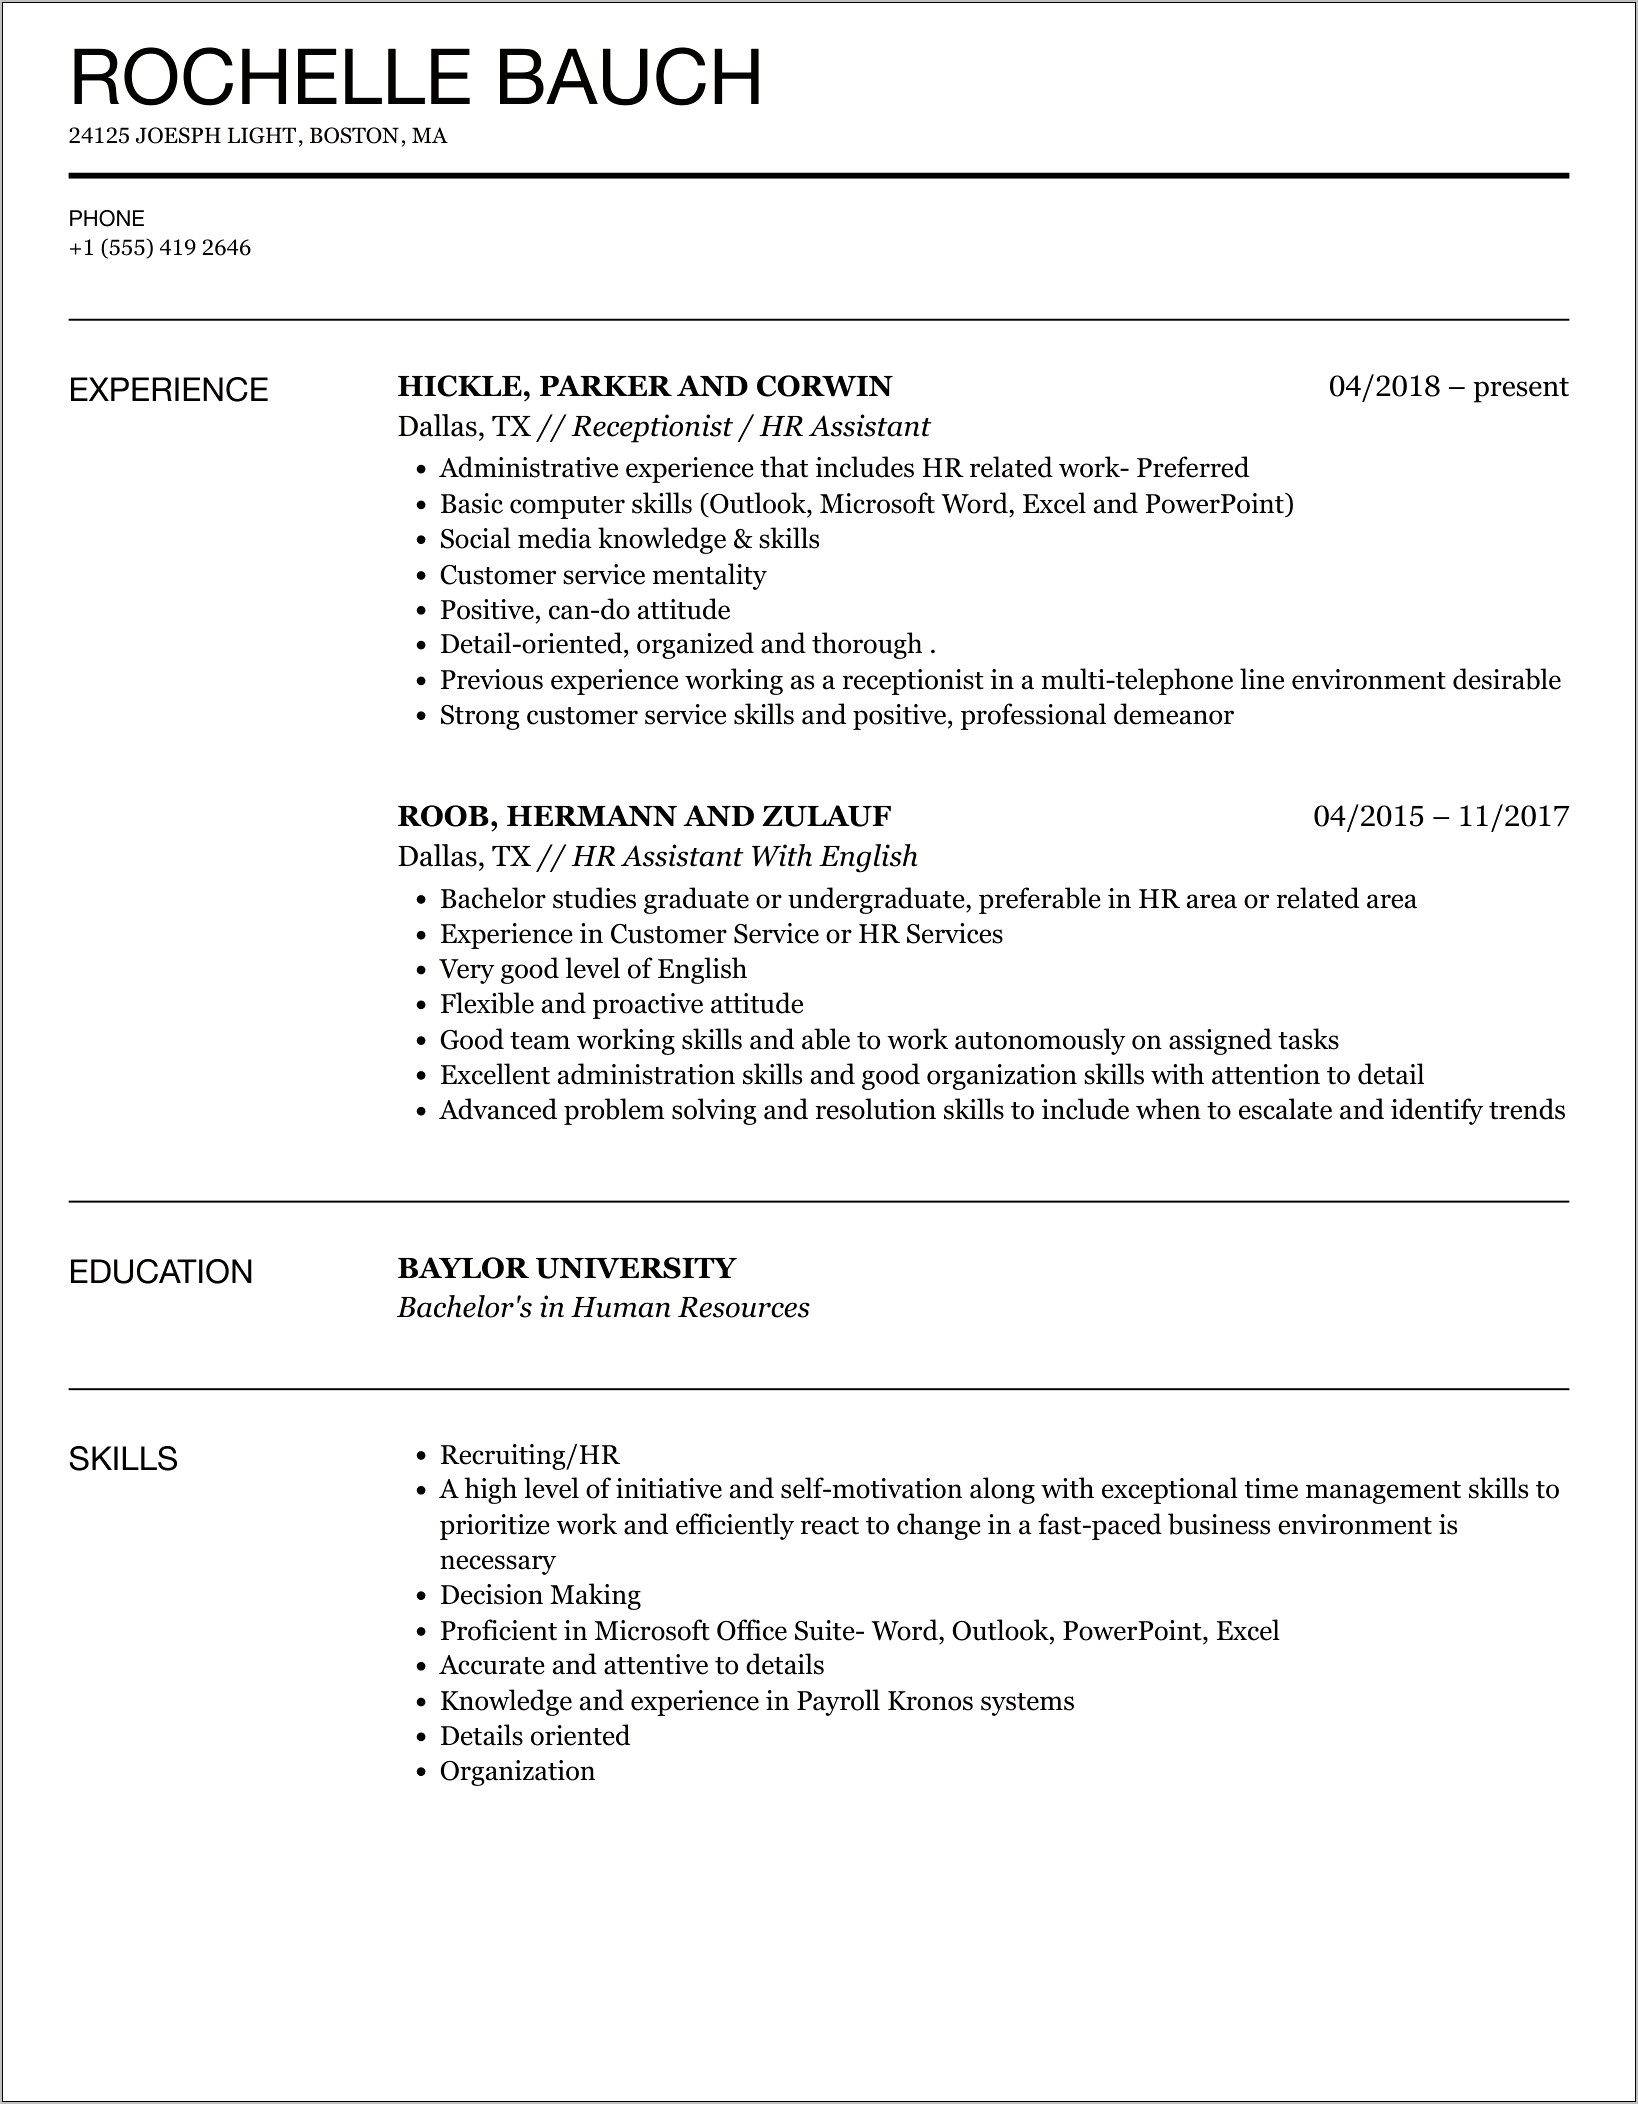 Resume Skills For Hr Assistant